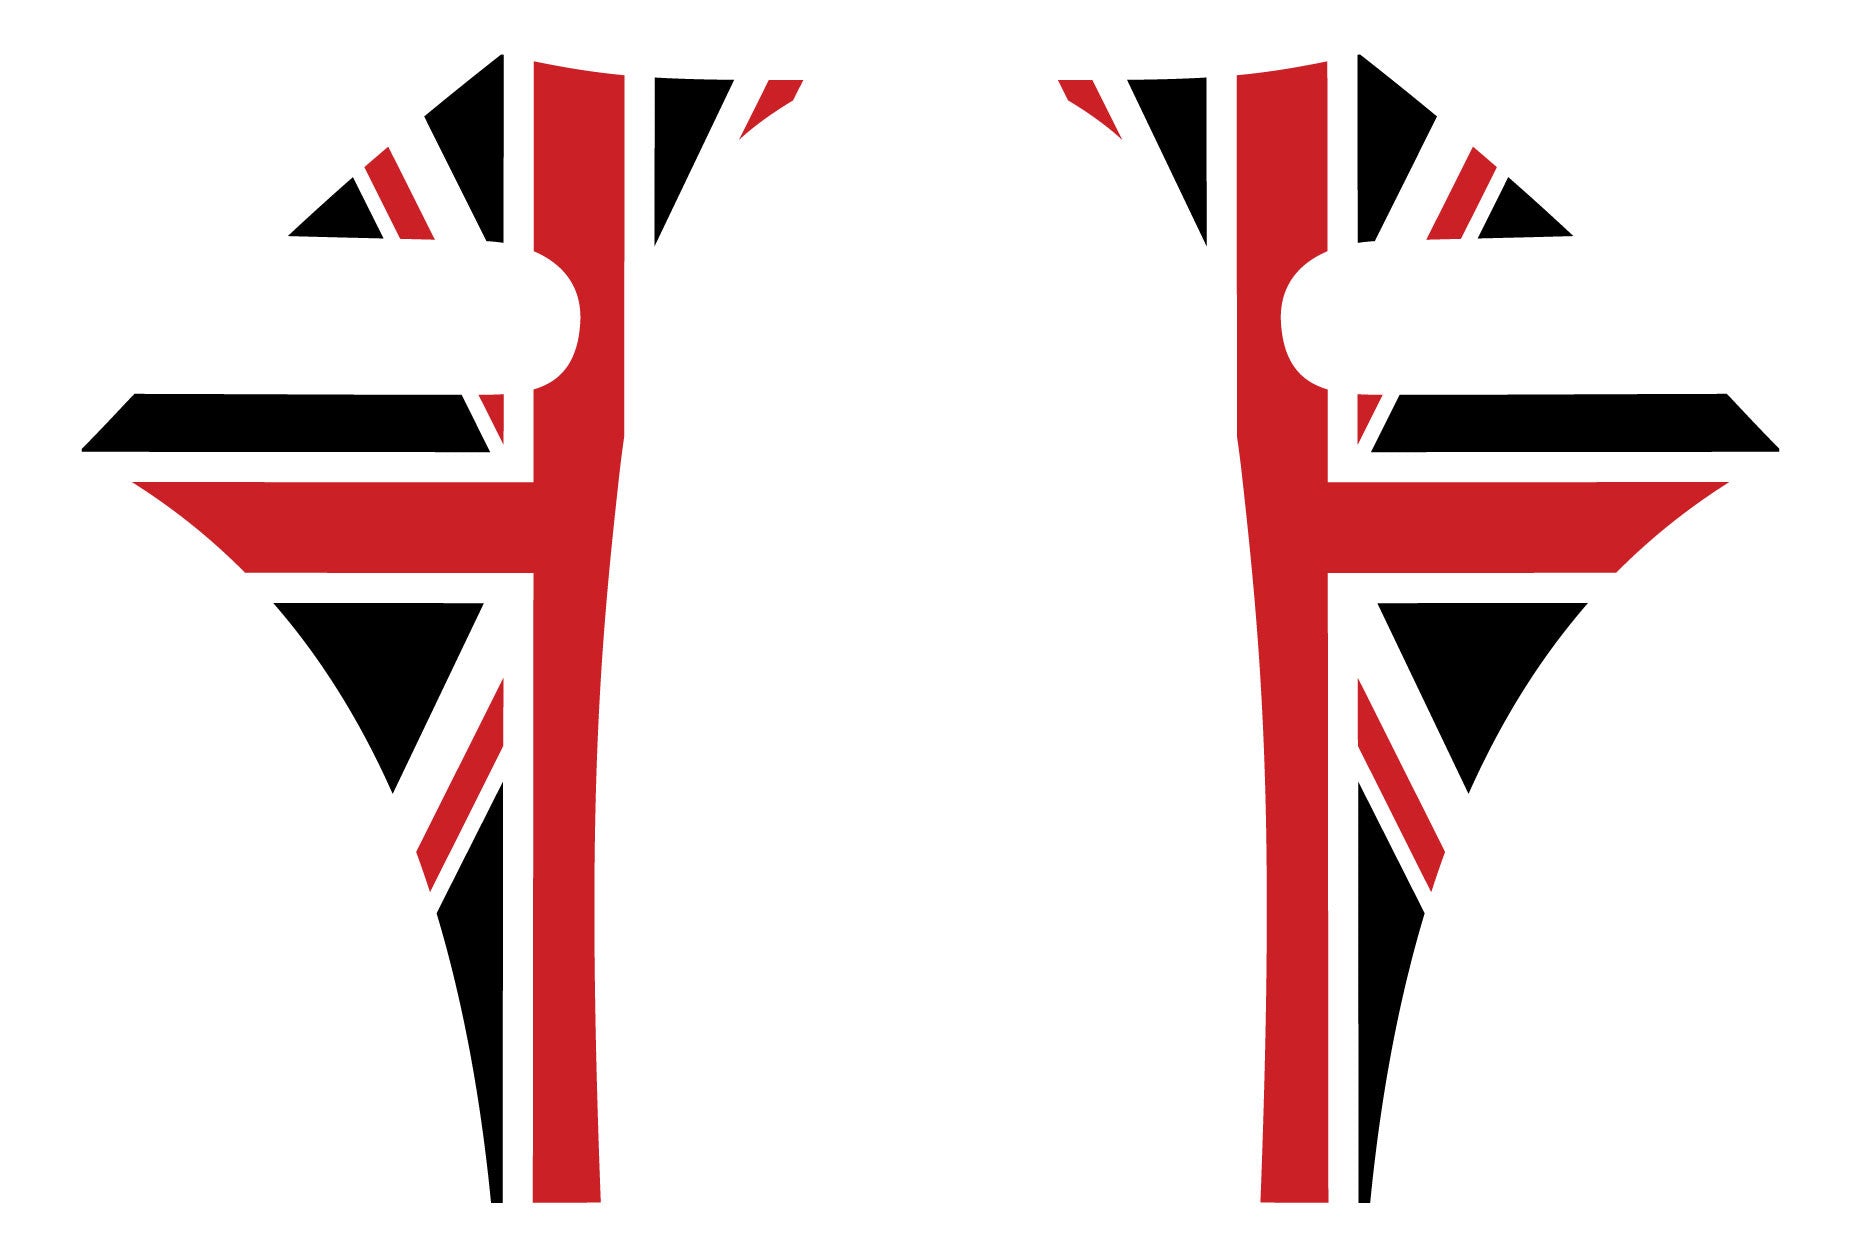 Mini Cooper 2007-2013 Union Jack English Flag A-Panel Red White Black Decal Kit - Exact Fit